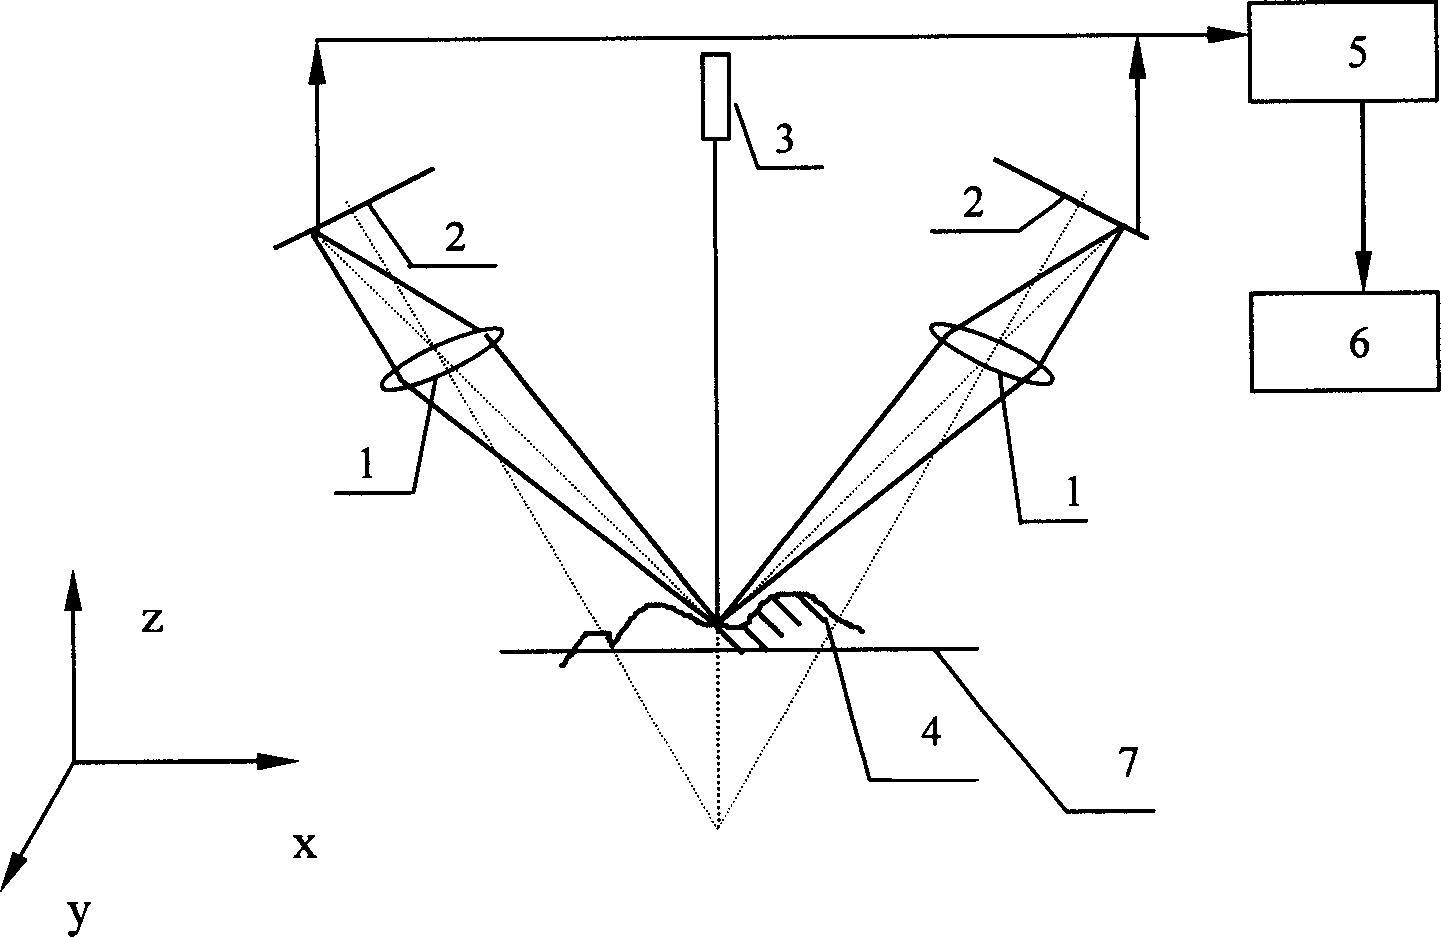 Method for detecting emergy wheel surface topography using laser scan triangular method